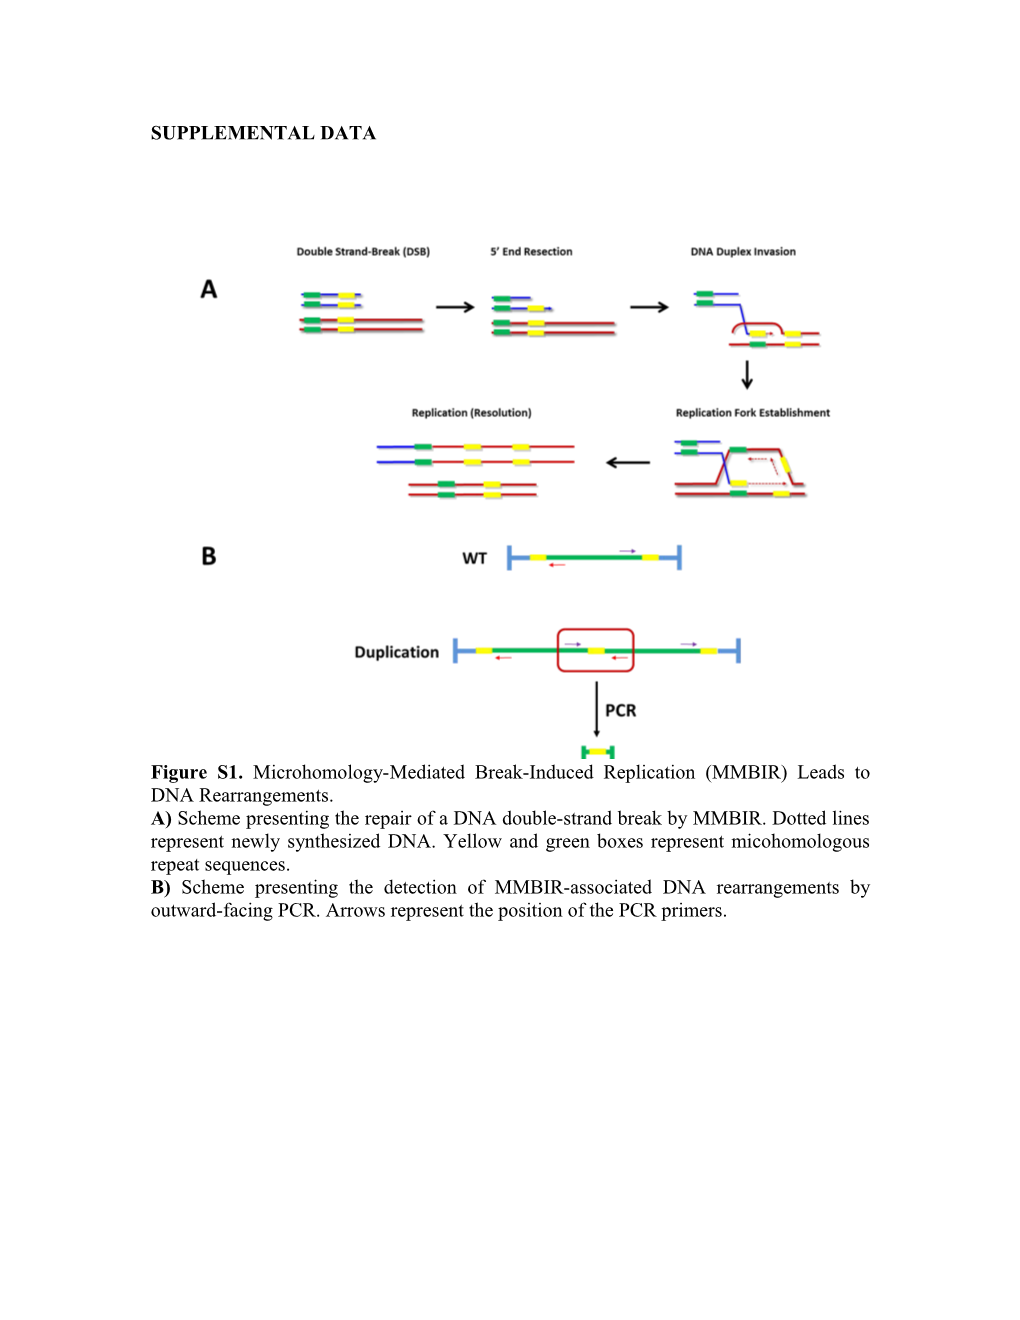 Figure S1. Microhomology-Mediated Break-Induced Replication (MMBIR) Leads to DNA Rearrangements